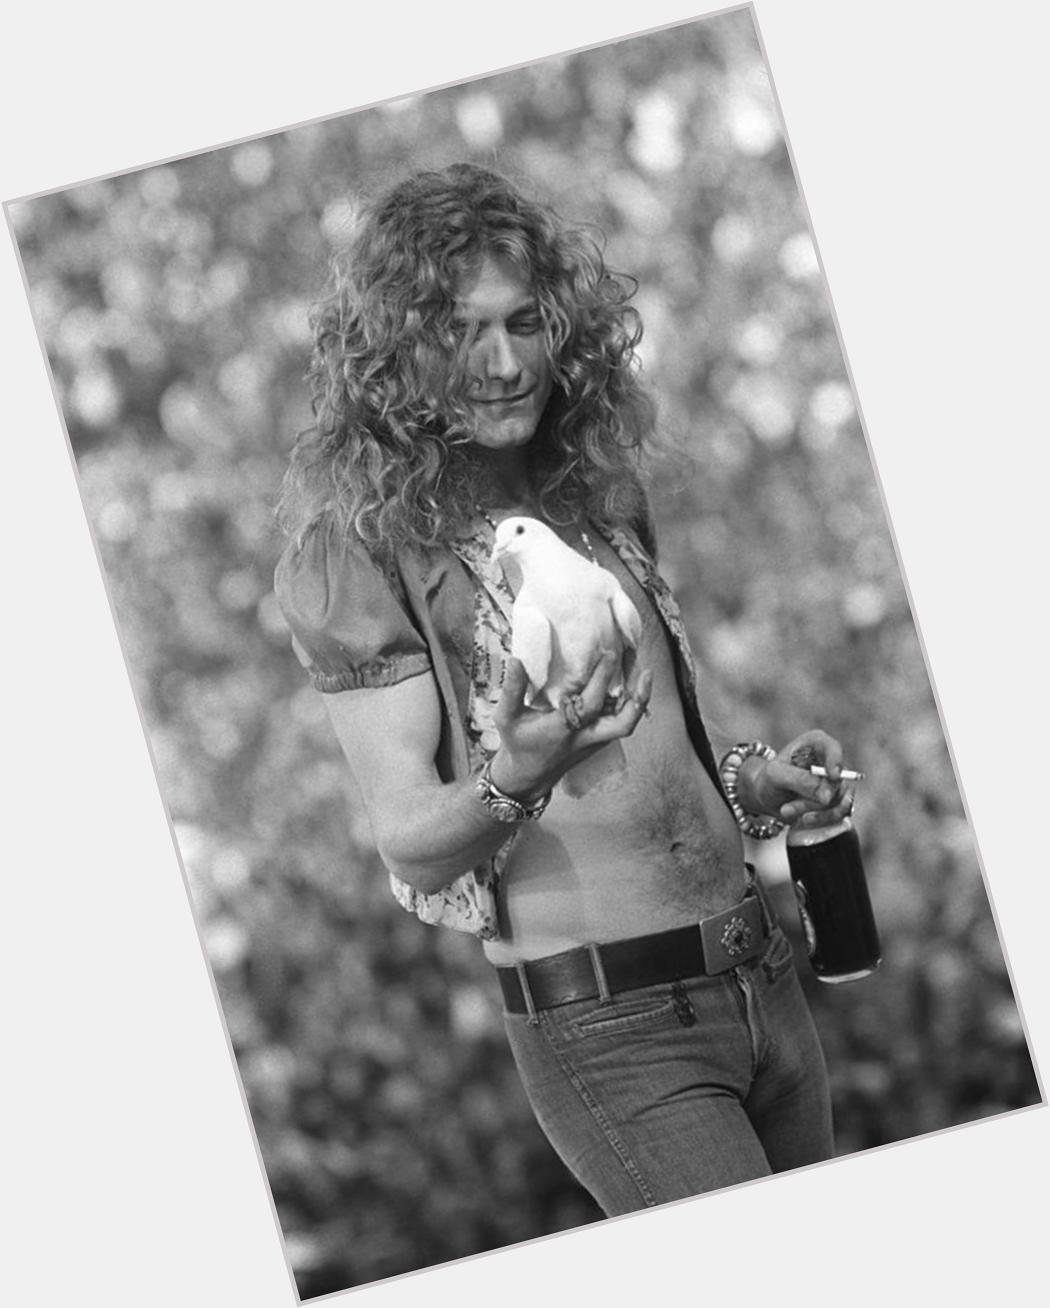 Happy Birthday Robert Plant!
Photo: Neal Preston © 